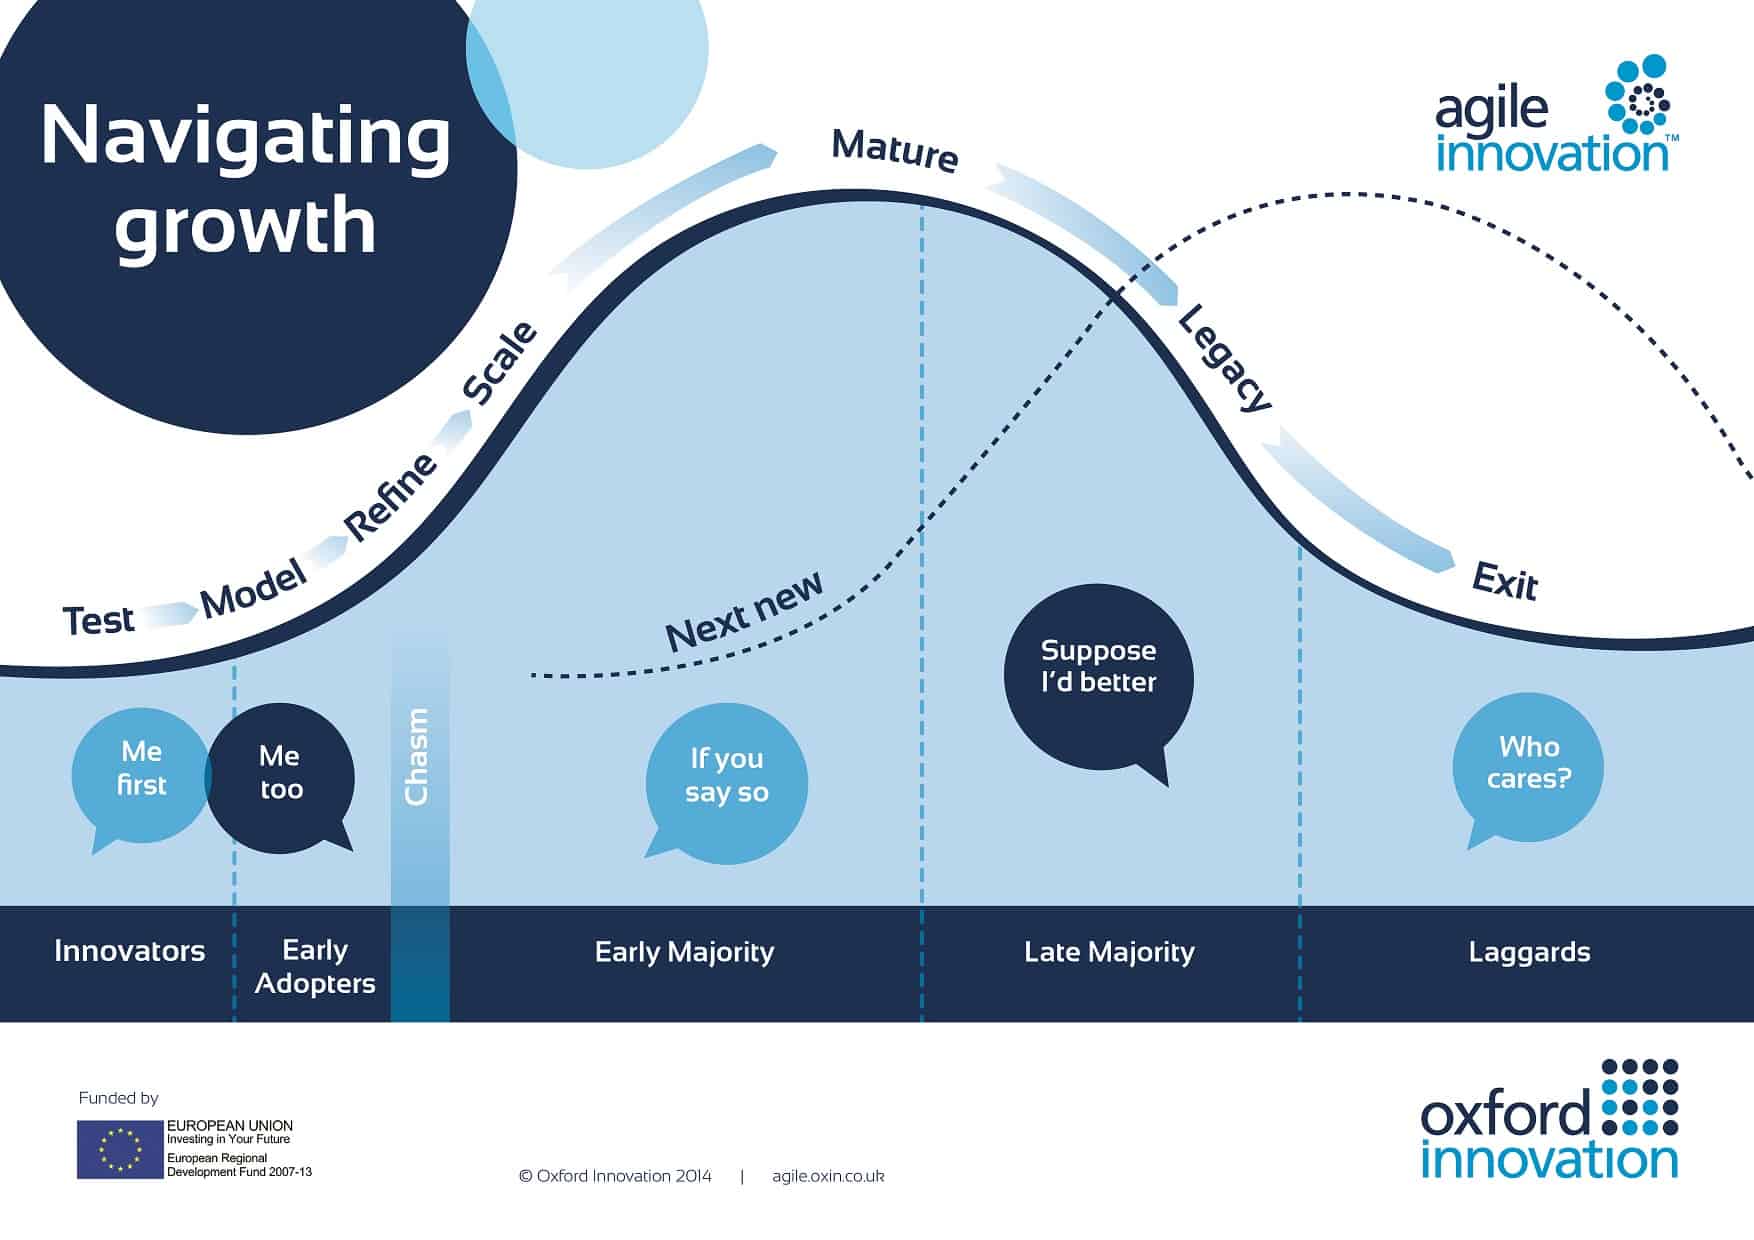 Agile Innovation Business Growth Lifecycle